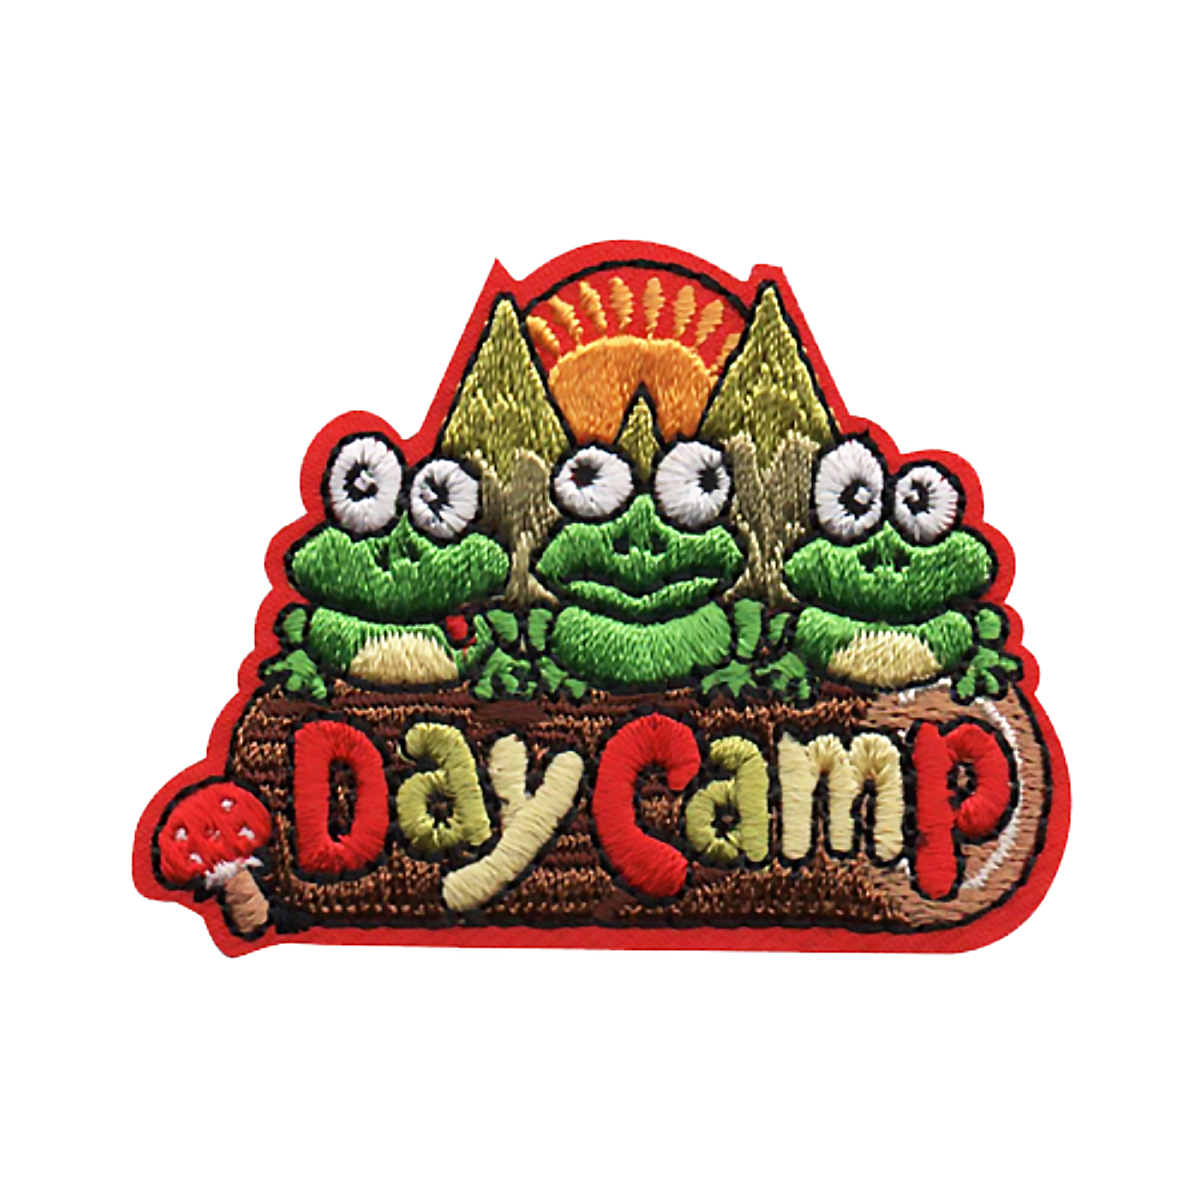 Day Camp - W